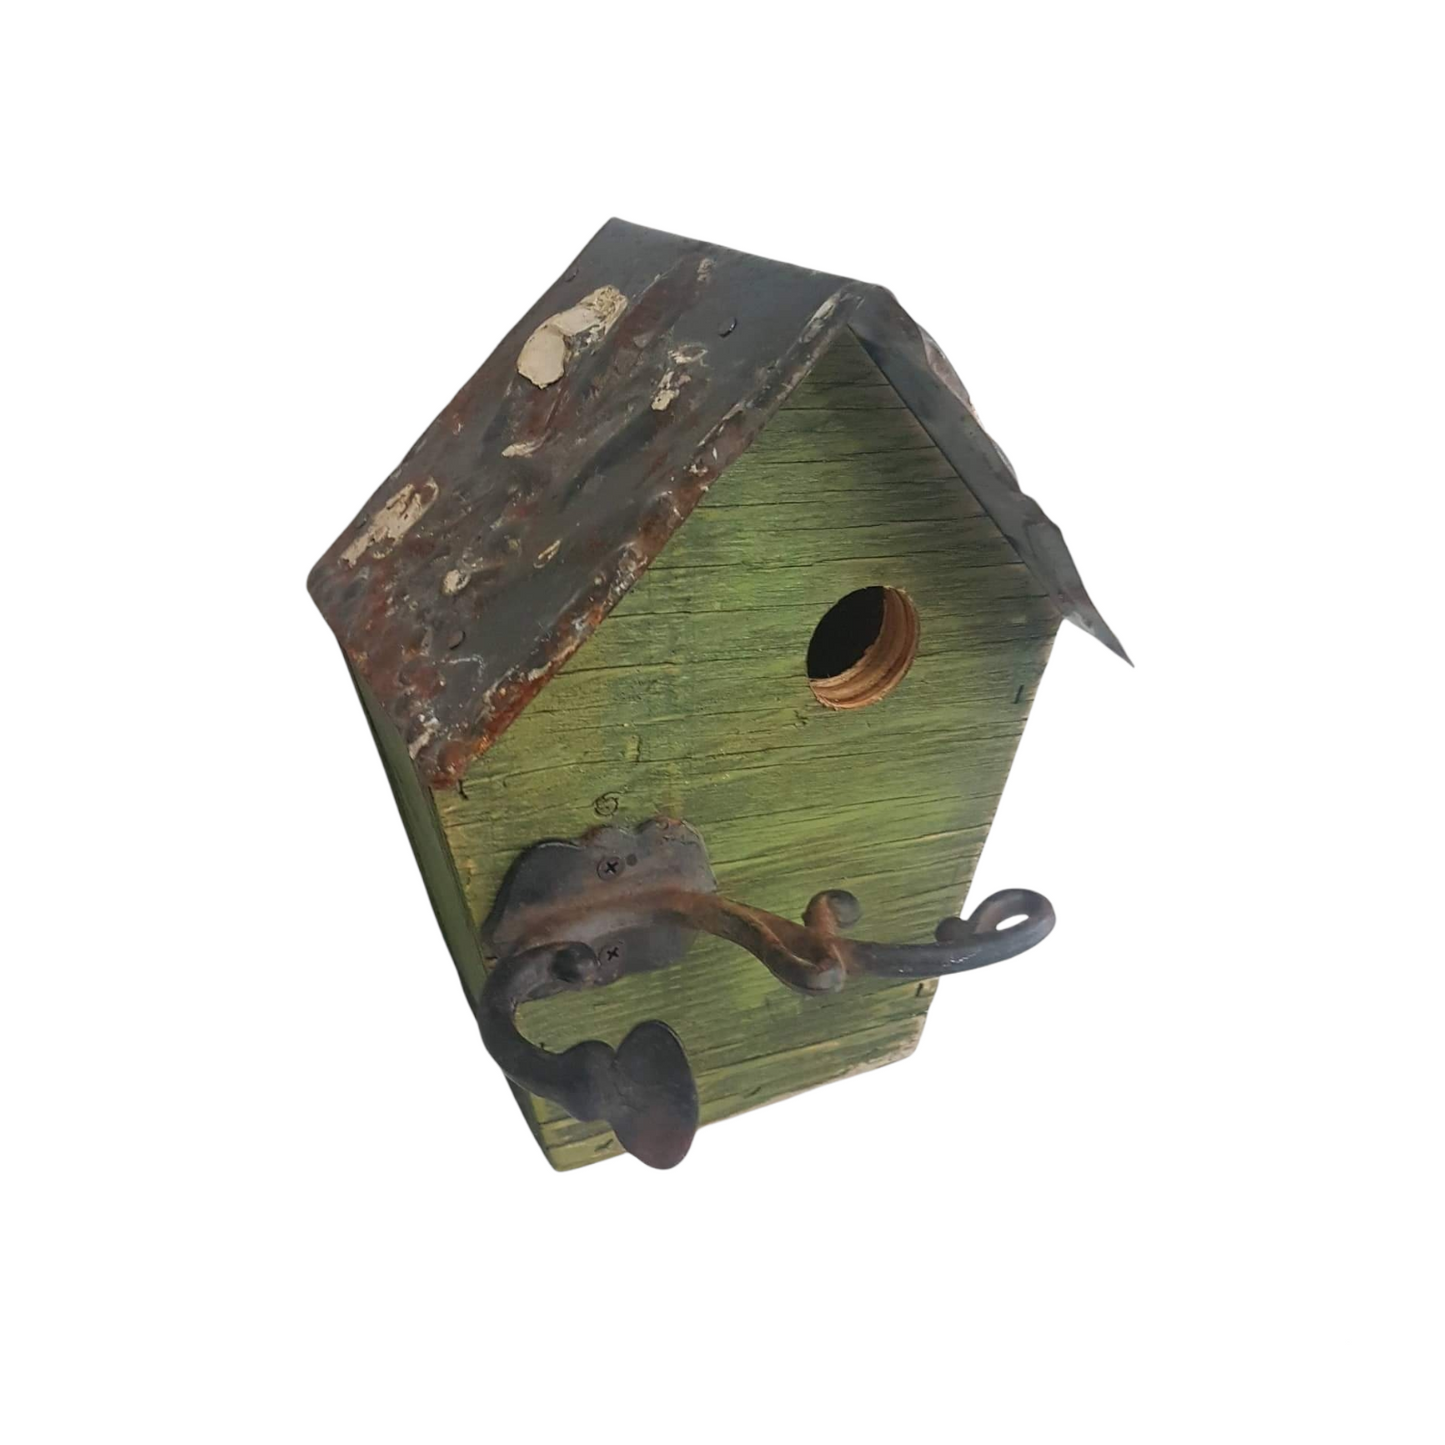 folk-art rustic birdhouse handcrafted green a frame birdhouse